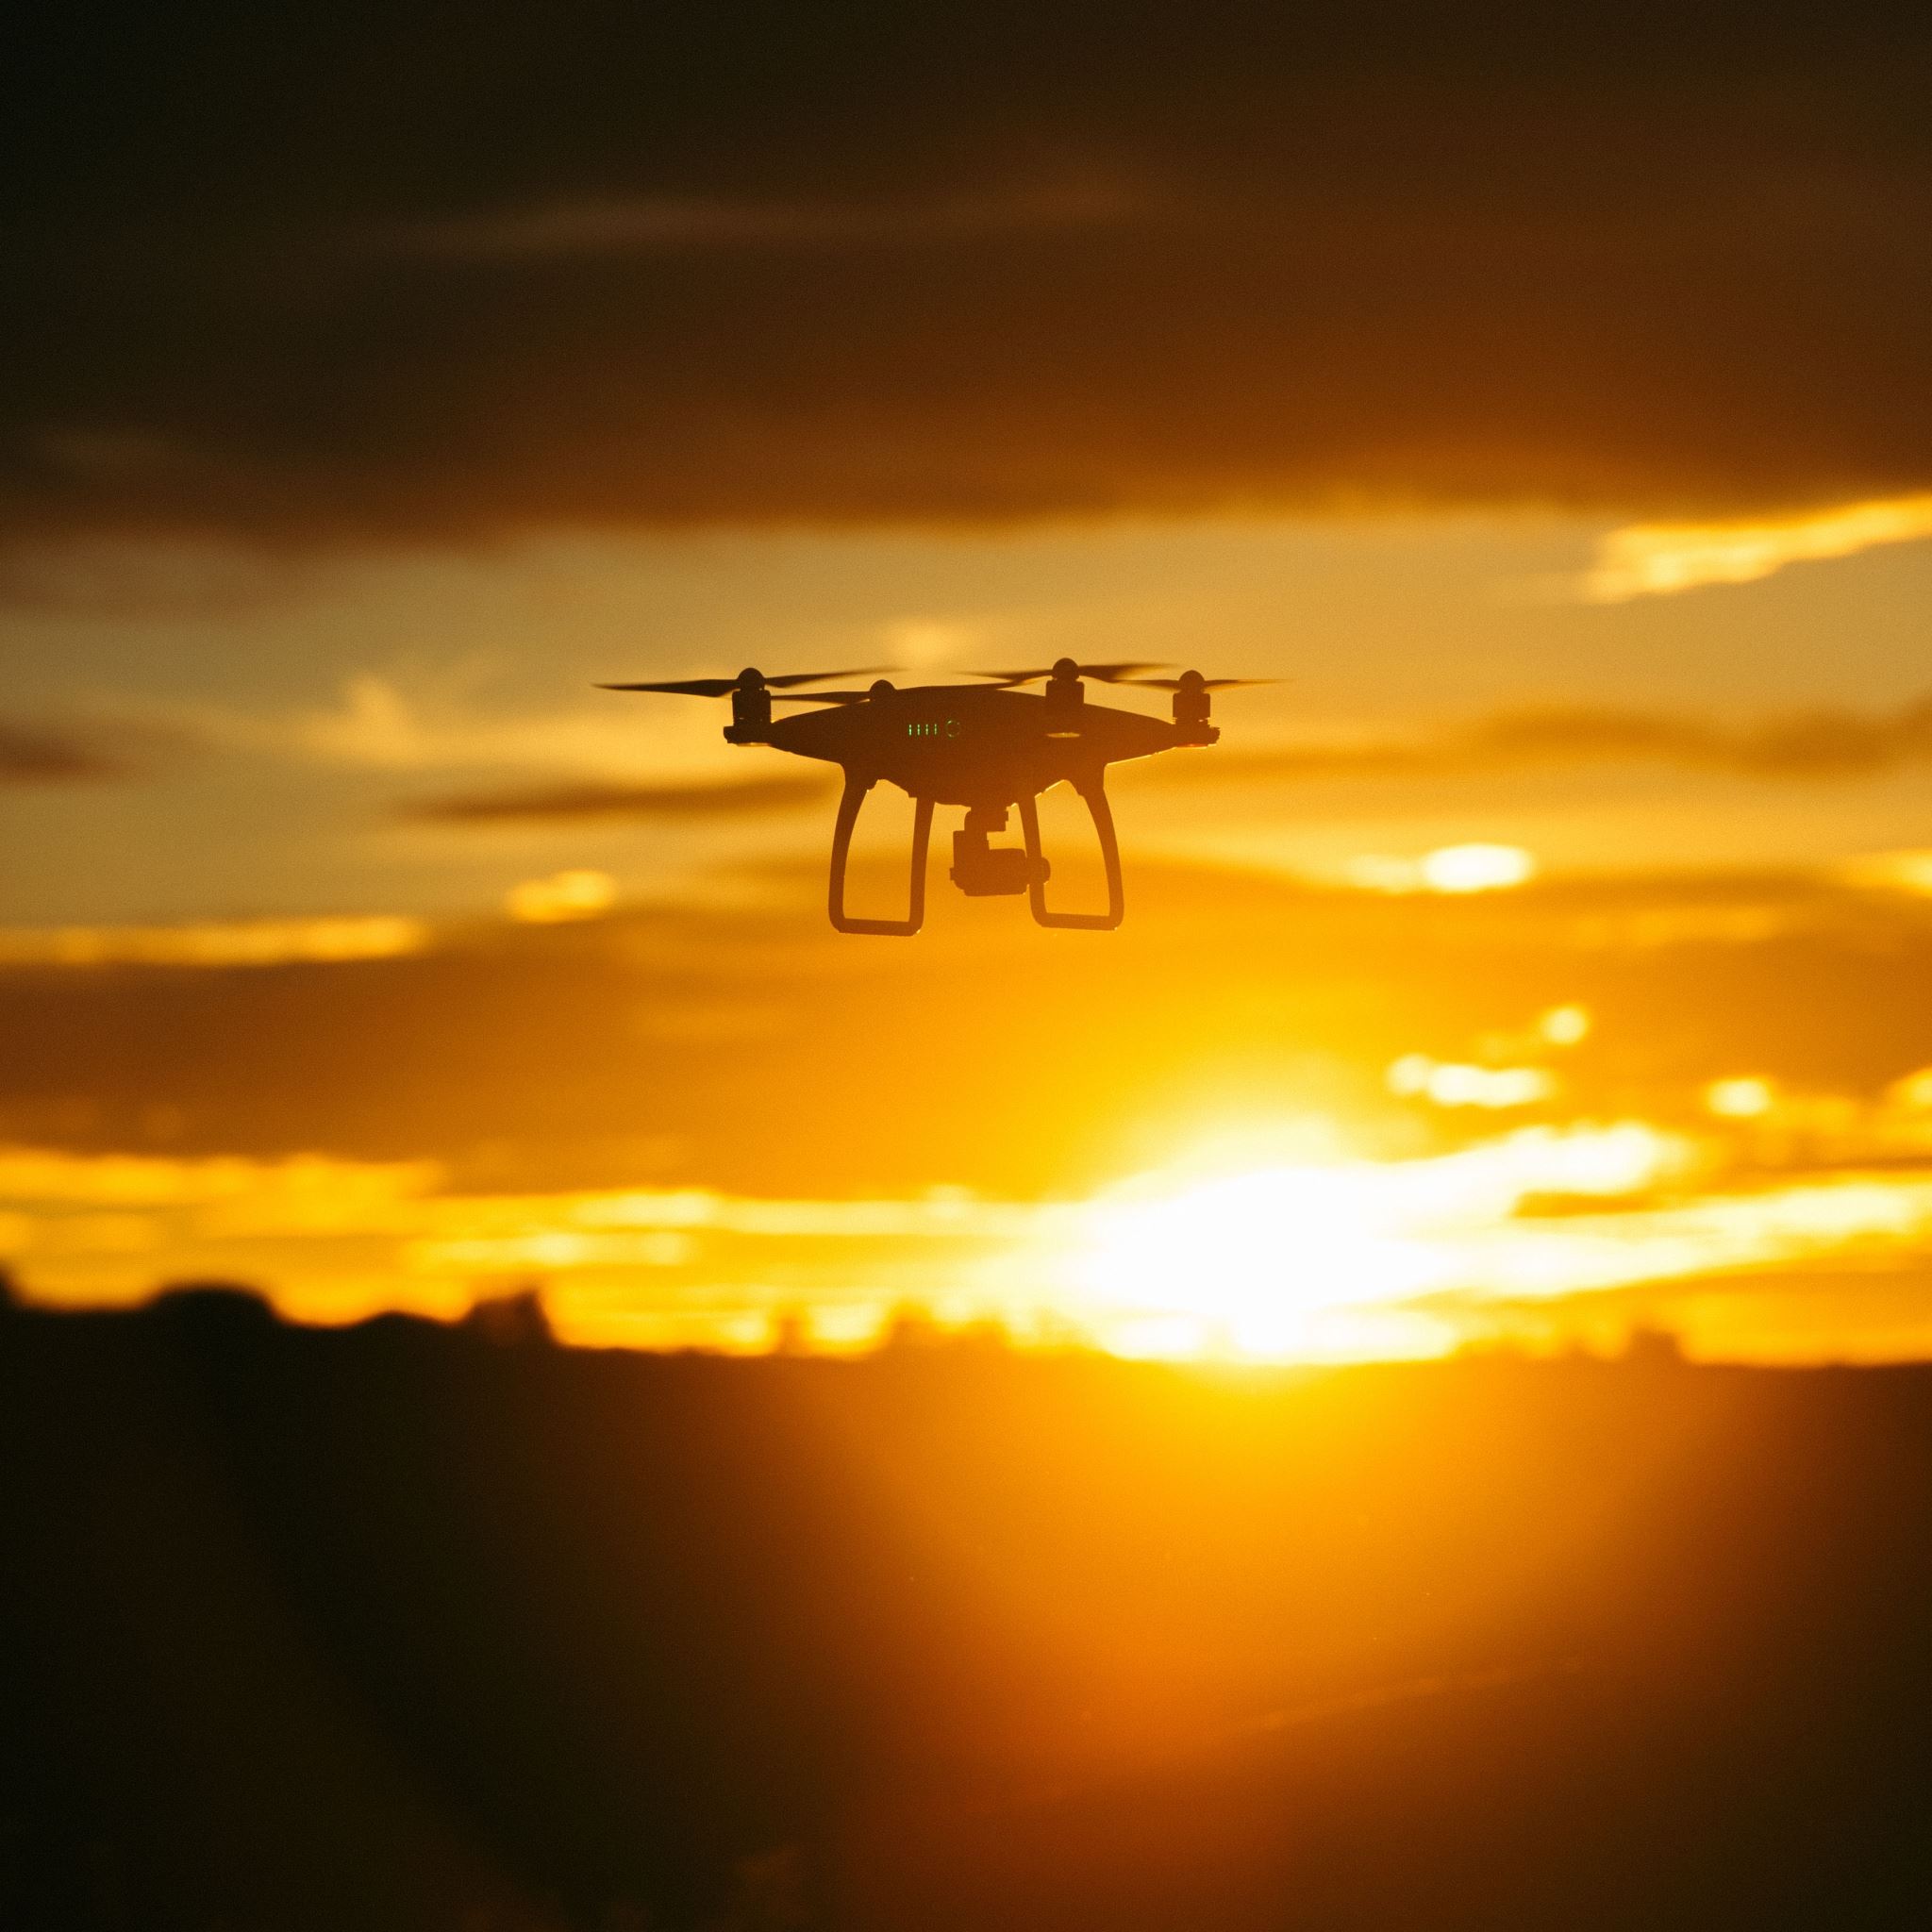 Quadrocopter Sunset Sky Flight Drone iPad Air wallpaper 